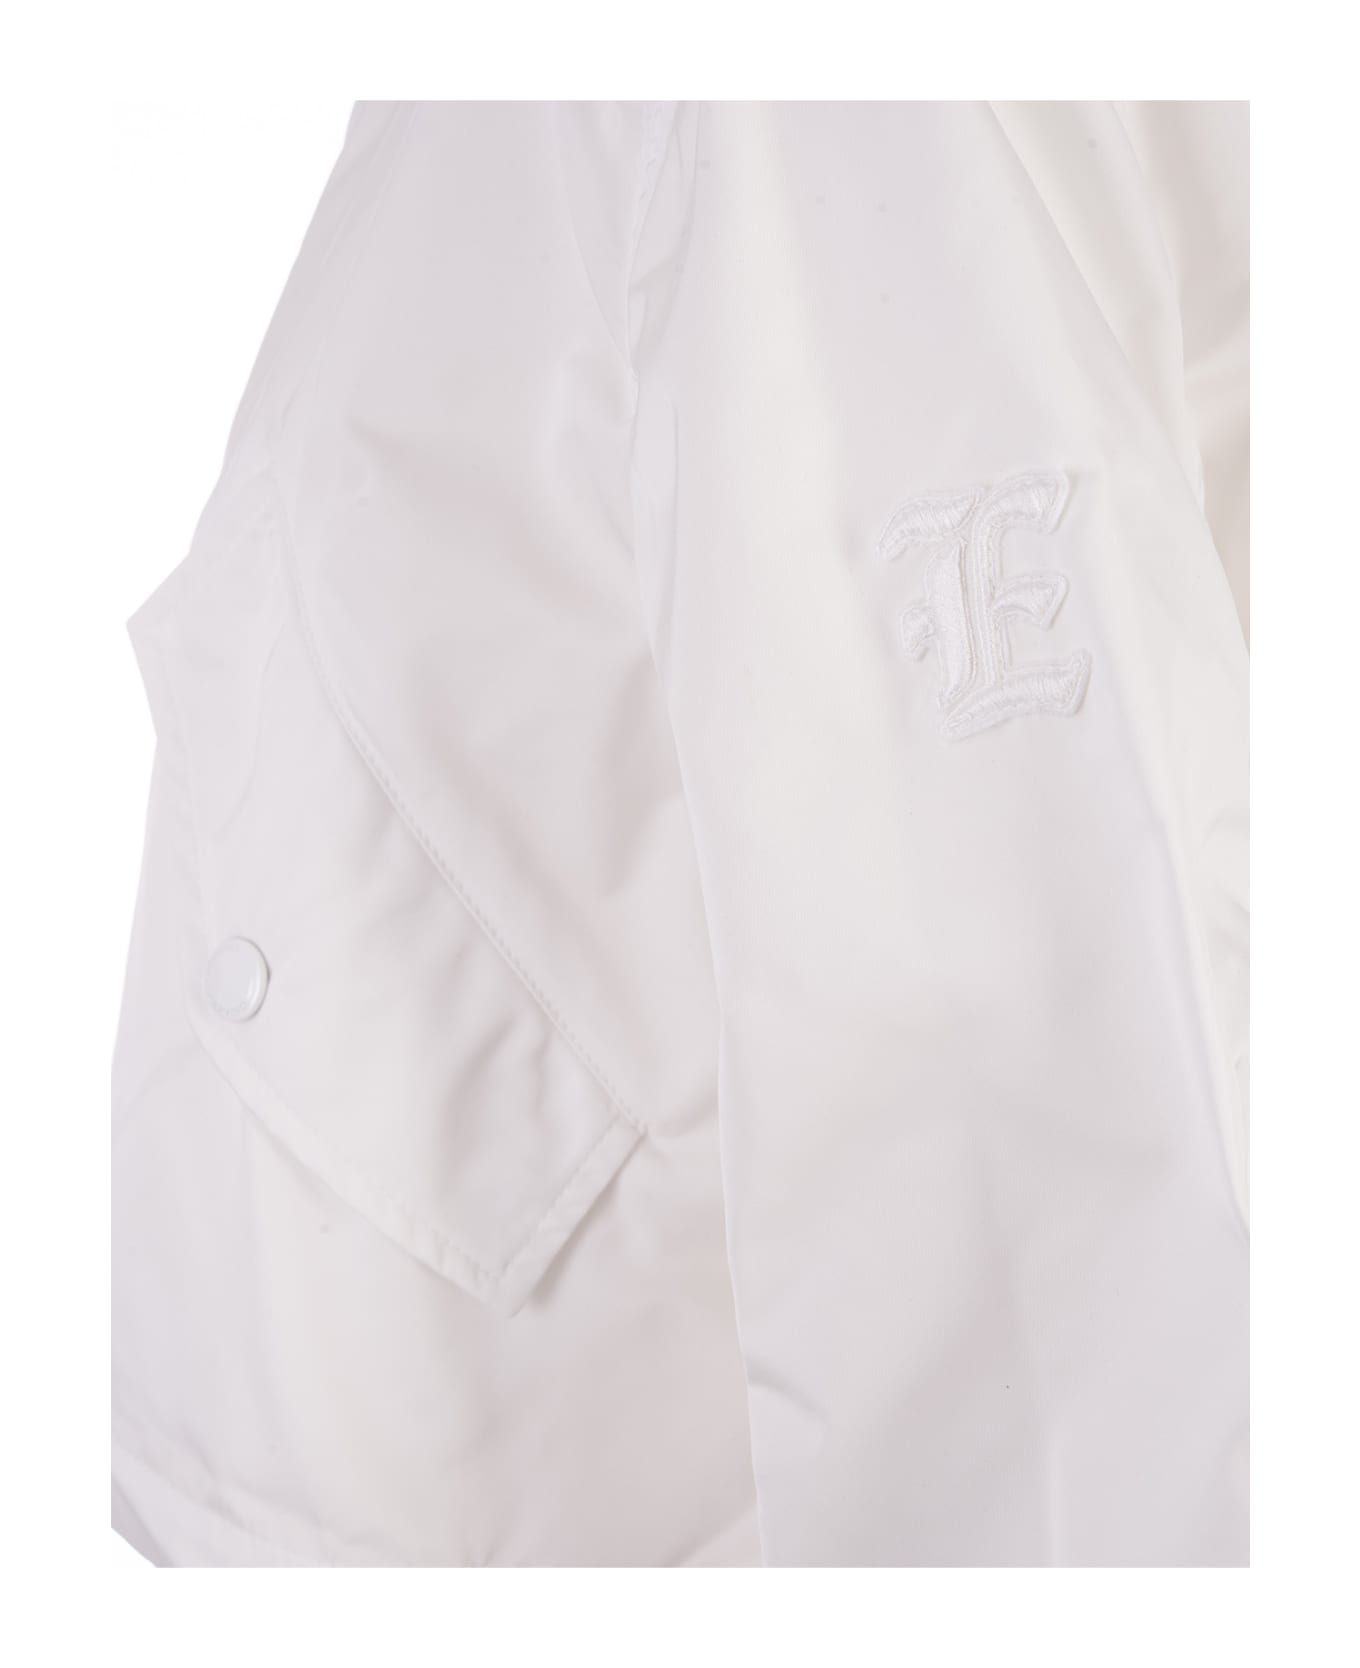 Ermanno Scervino White Short Windbreaker Jacket With Sangallo Lace - White ジャケット